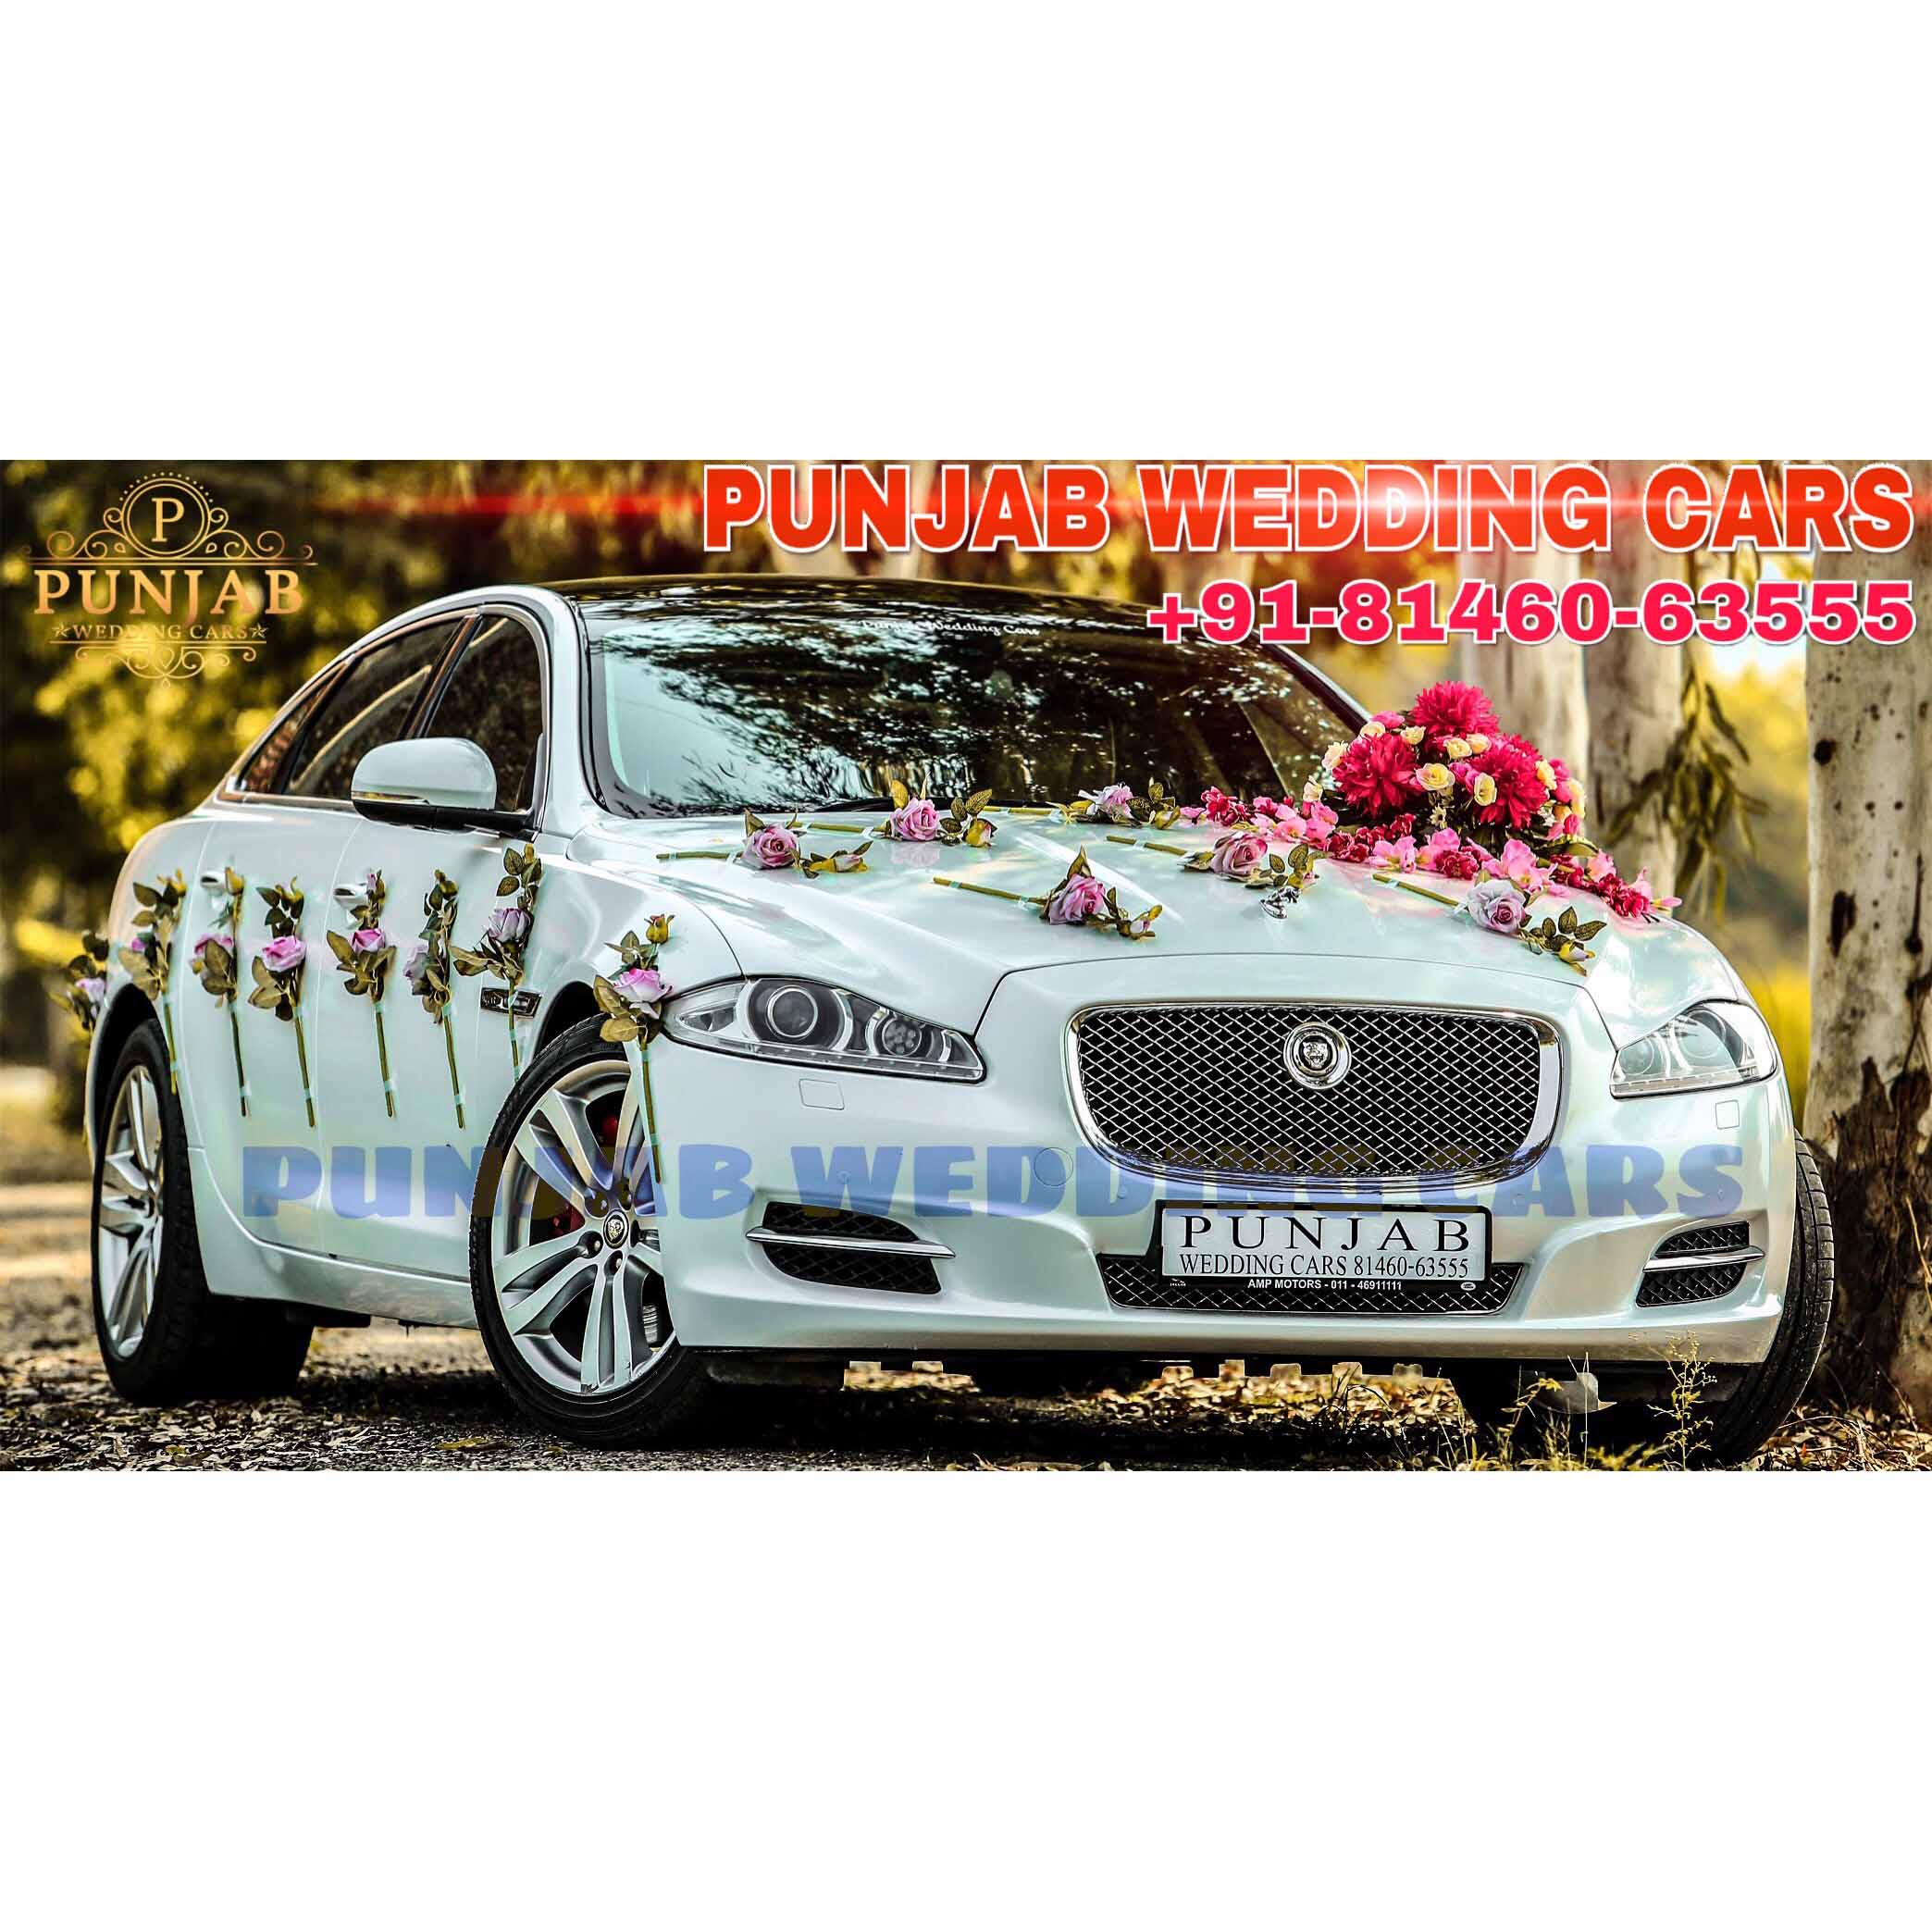 WEDDING CARS   for wedding rental in Punjab, India